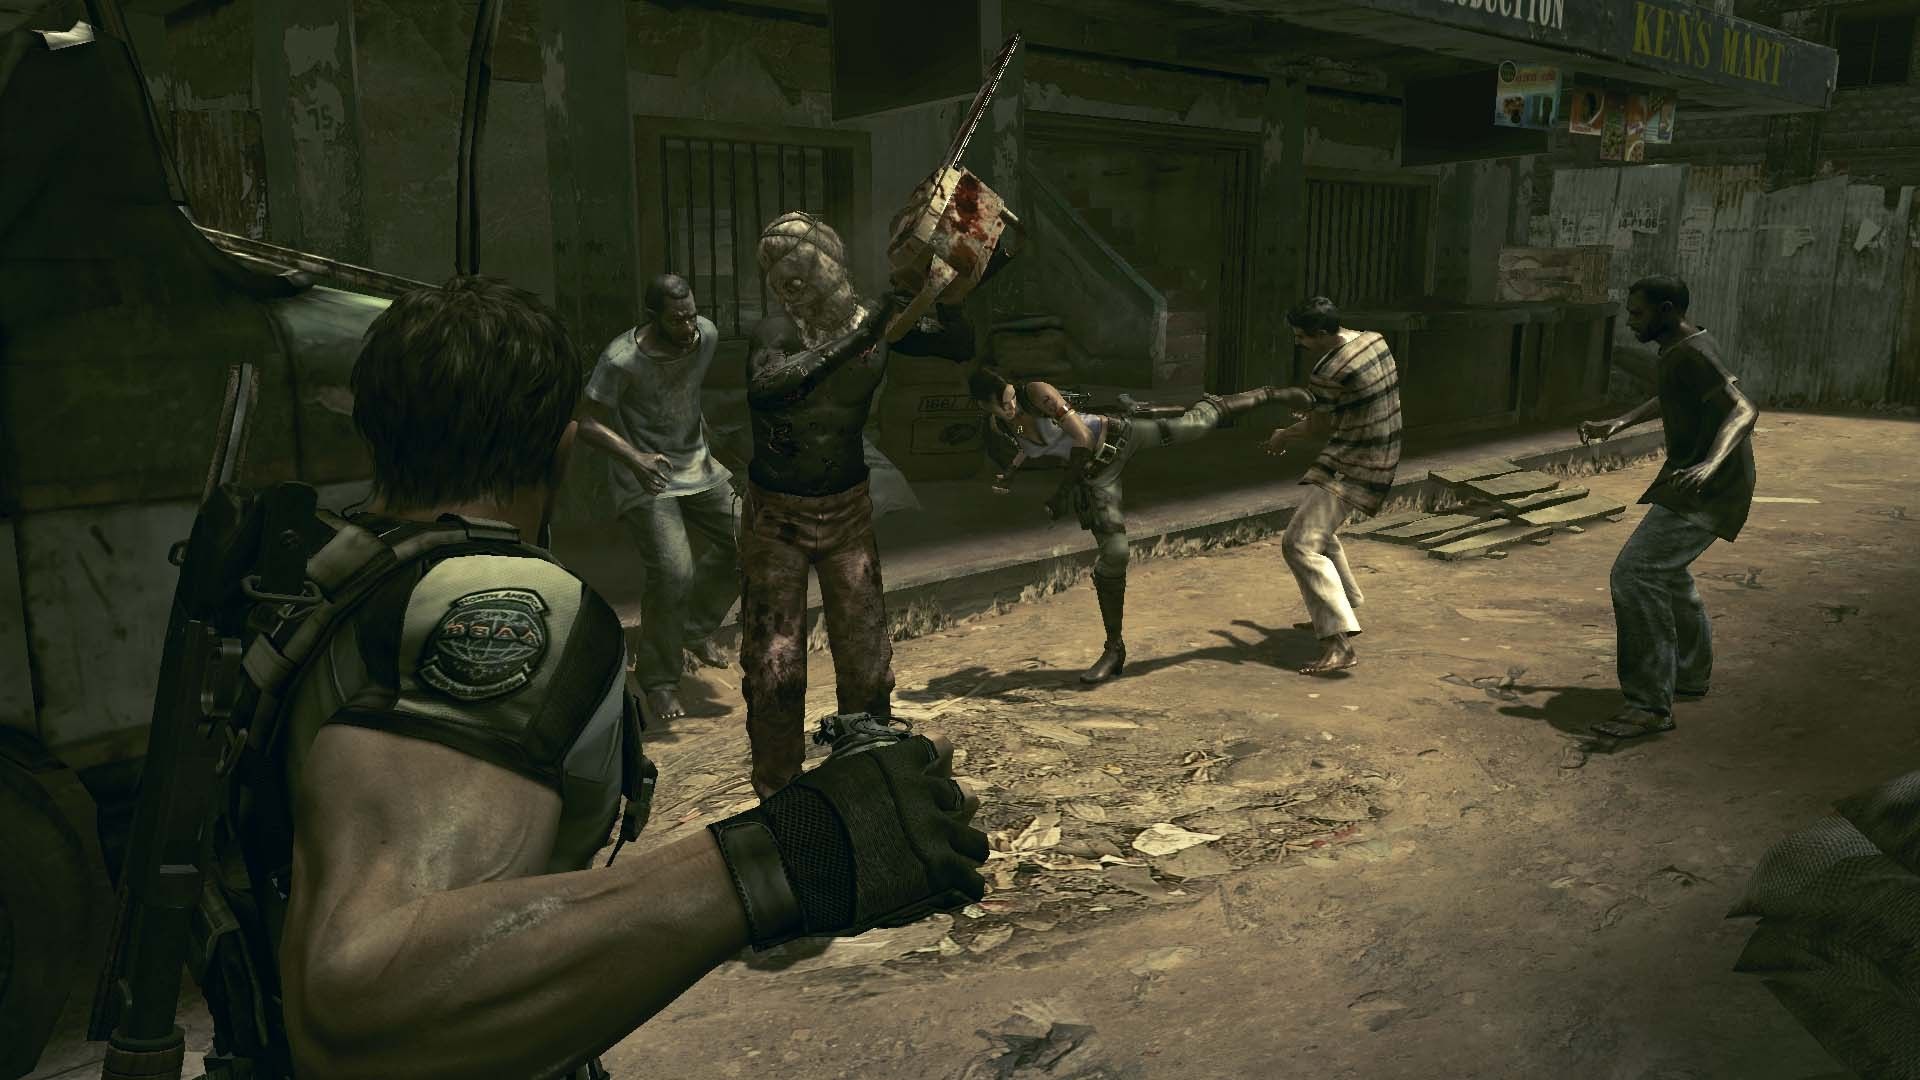 Скриншот *Resident Evil 5 [PS4] 5.05 / 6.72 / 7.02 [USA] (2016) [Русский] (v1.00)*